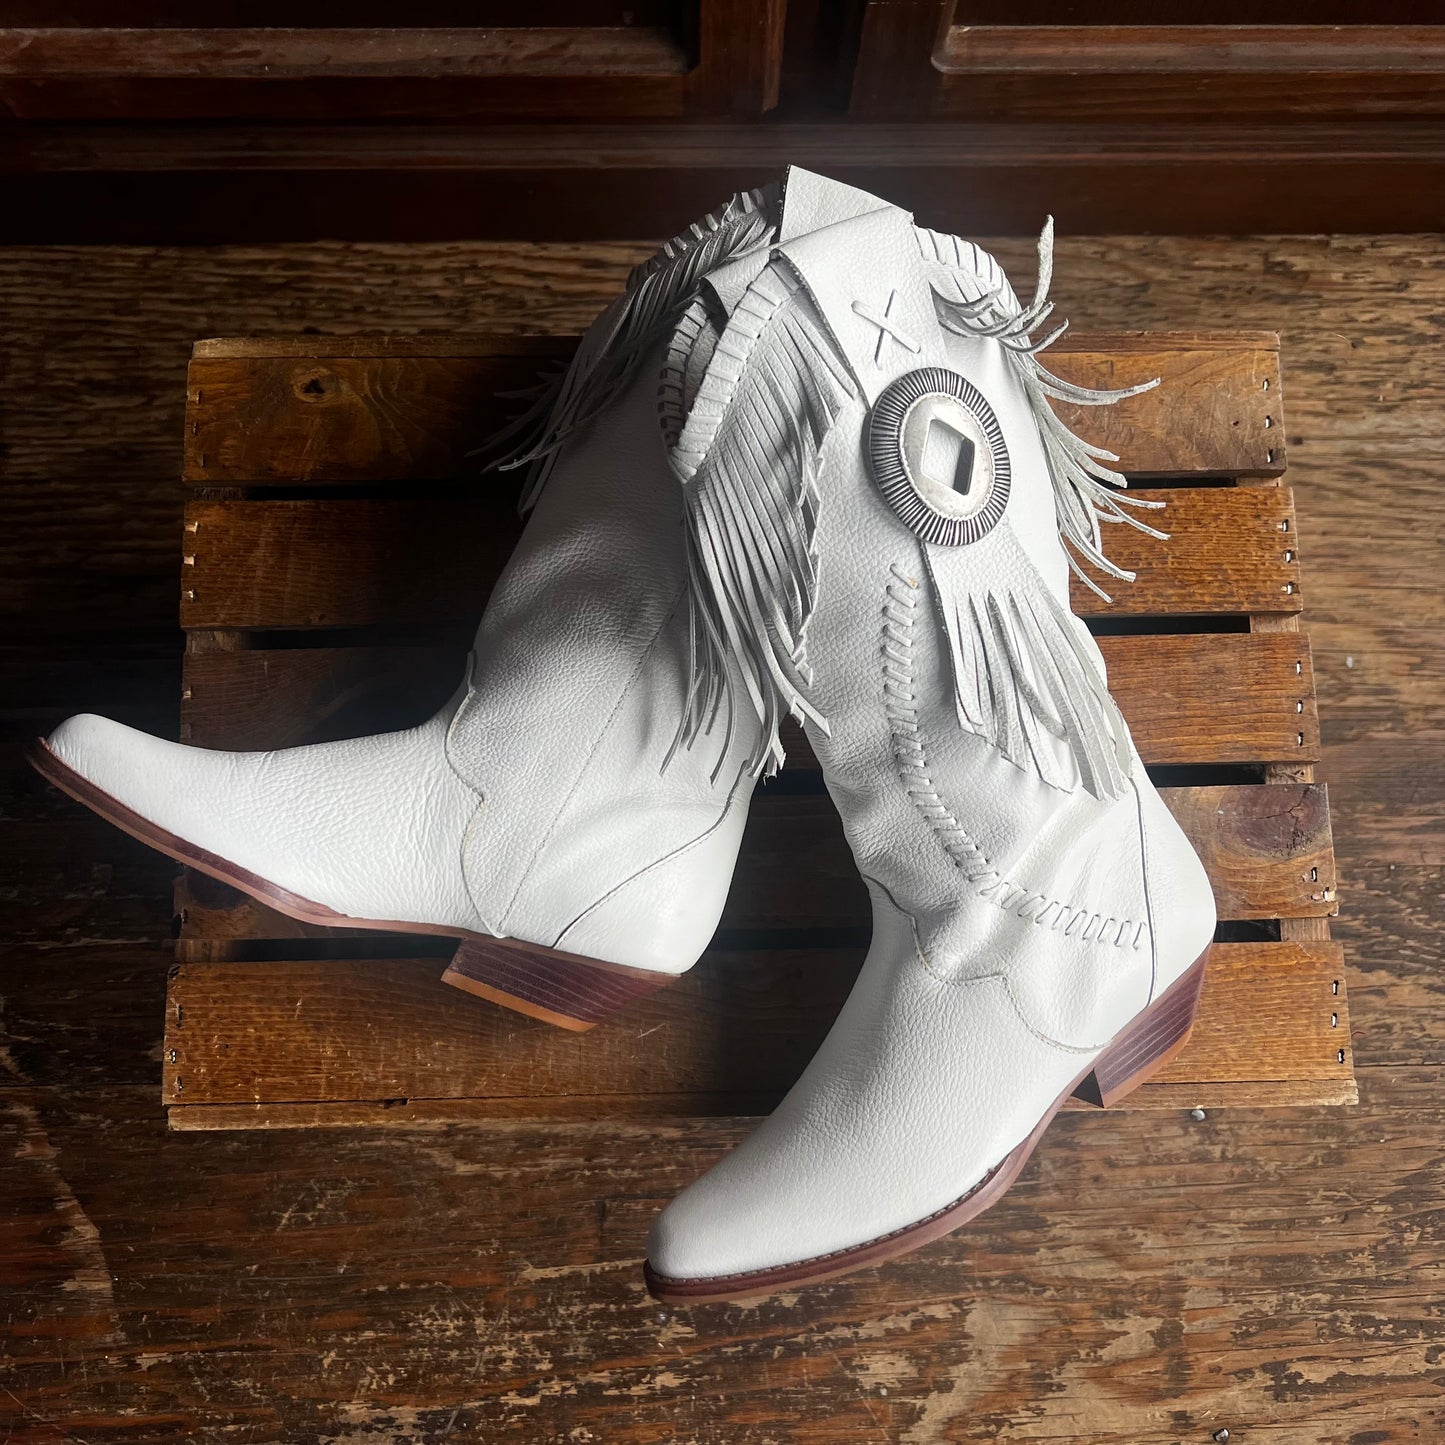 Size 5.5 Circles White Fringe Concho Boots